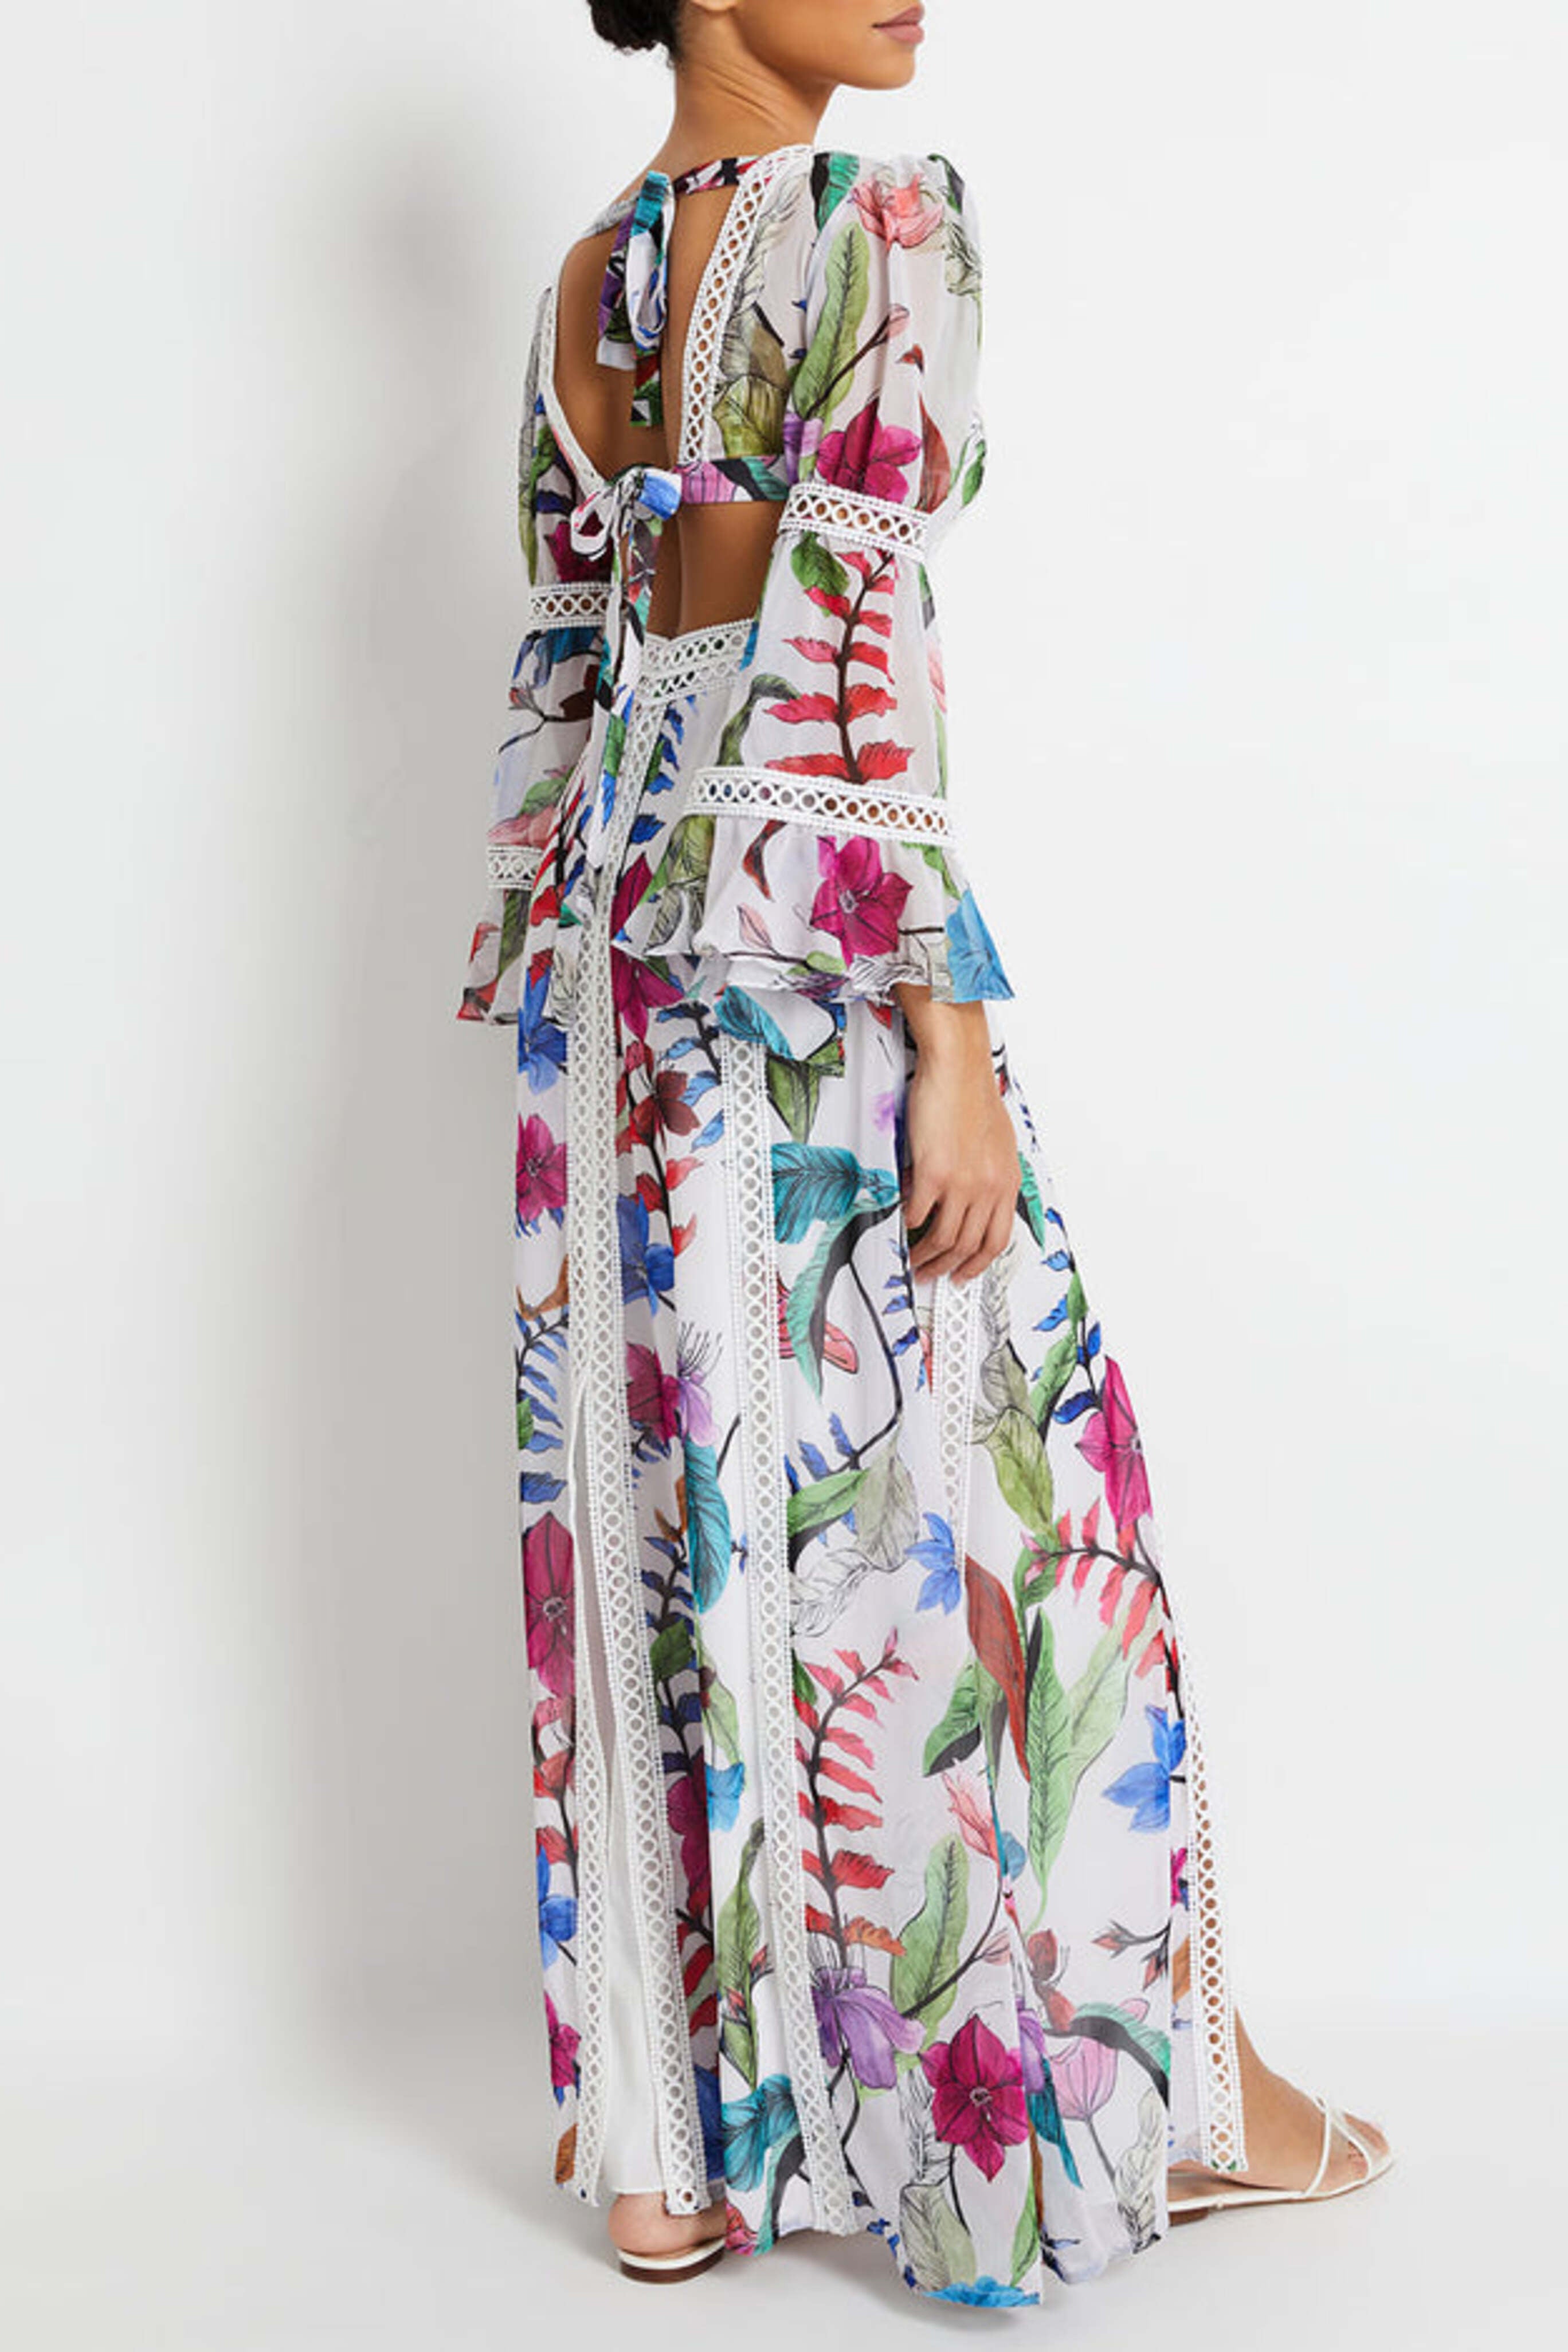 PATBO Zamia Floral Cut Out Maxi Dress